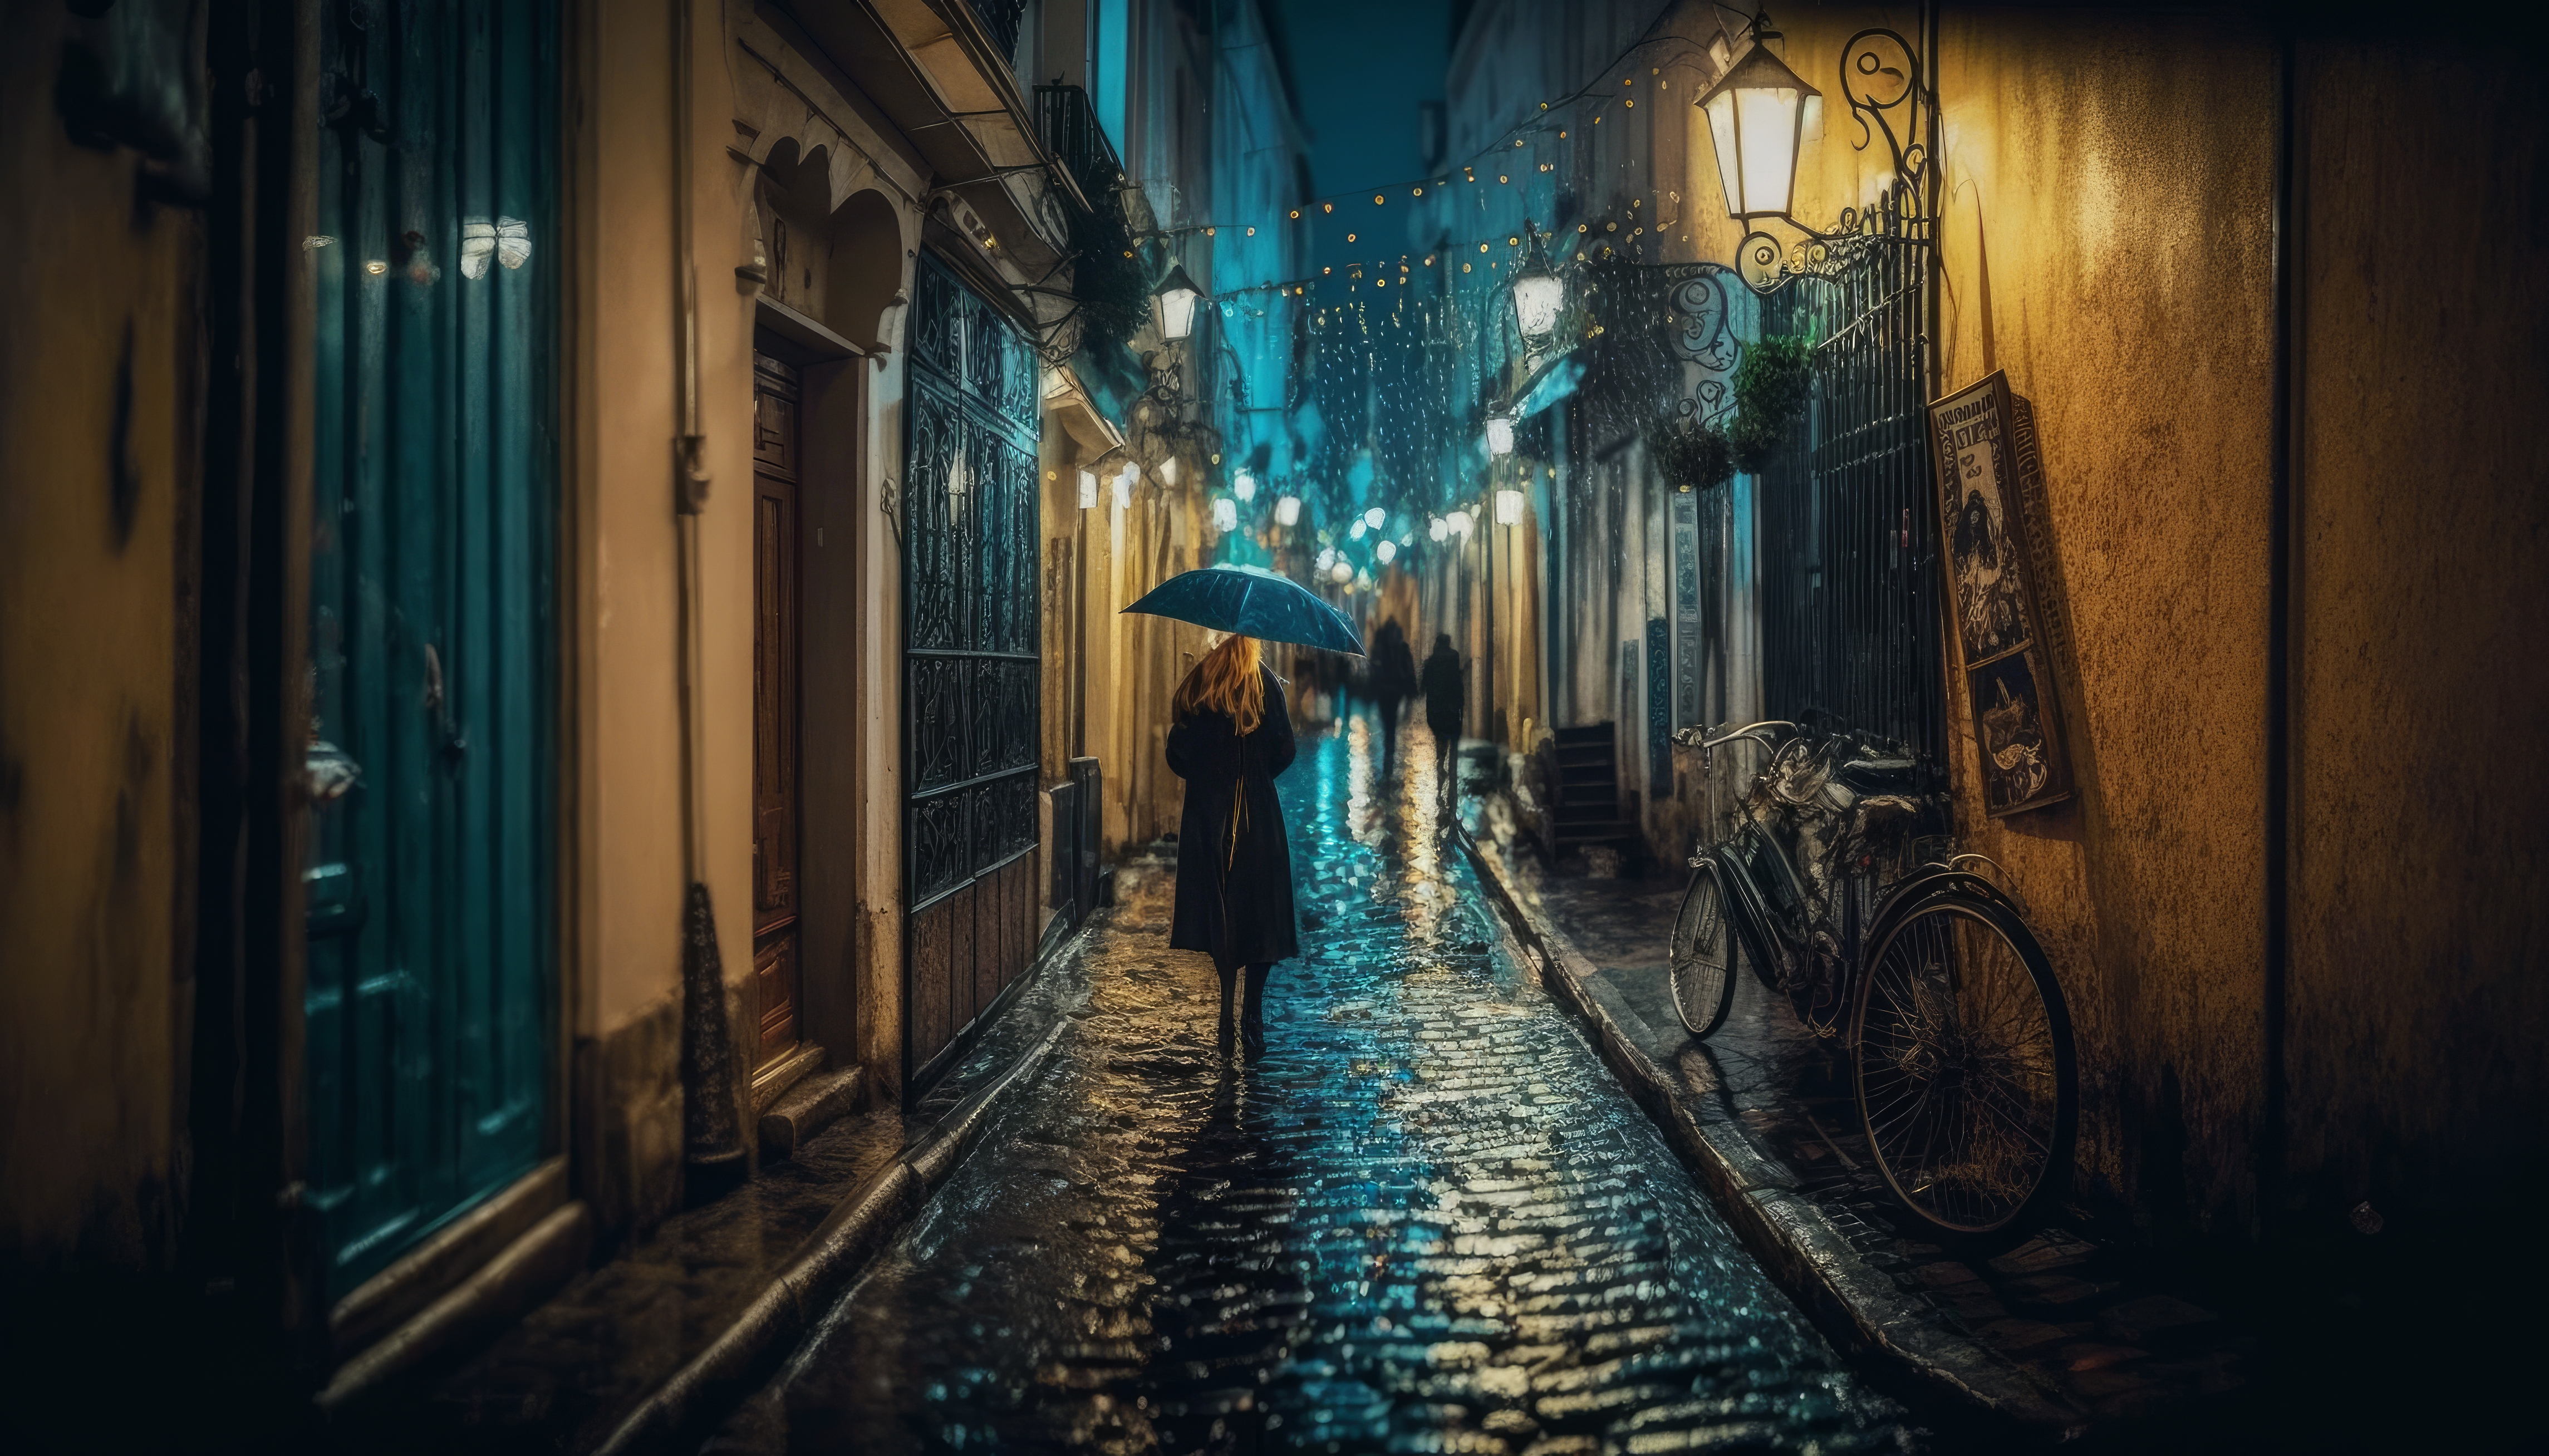 Ai Art Illustration Women Paris Umbrella Cobblestone Small Alley Alleyway Street Light Bicycle 4579x2616